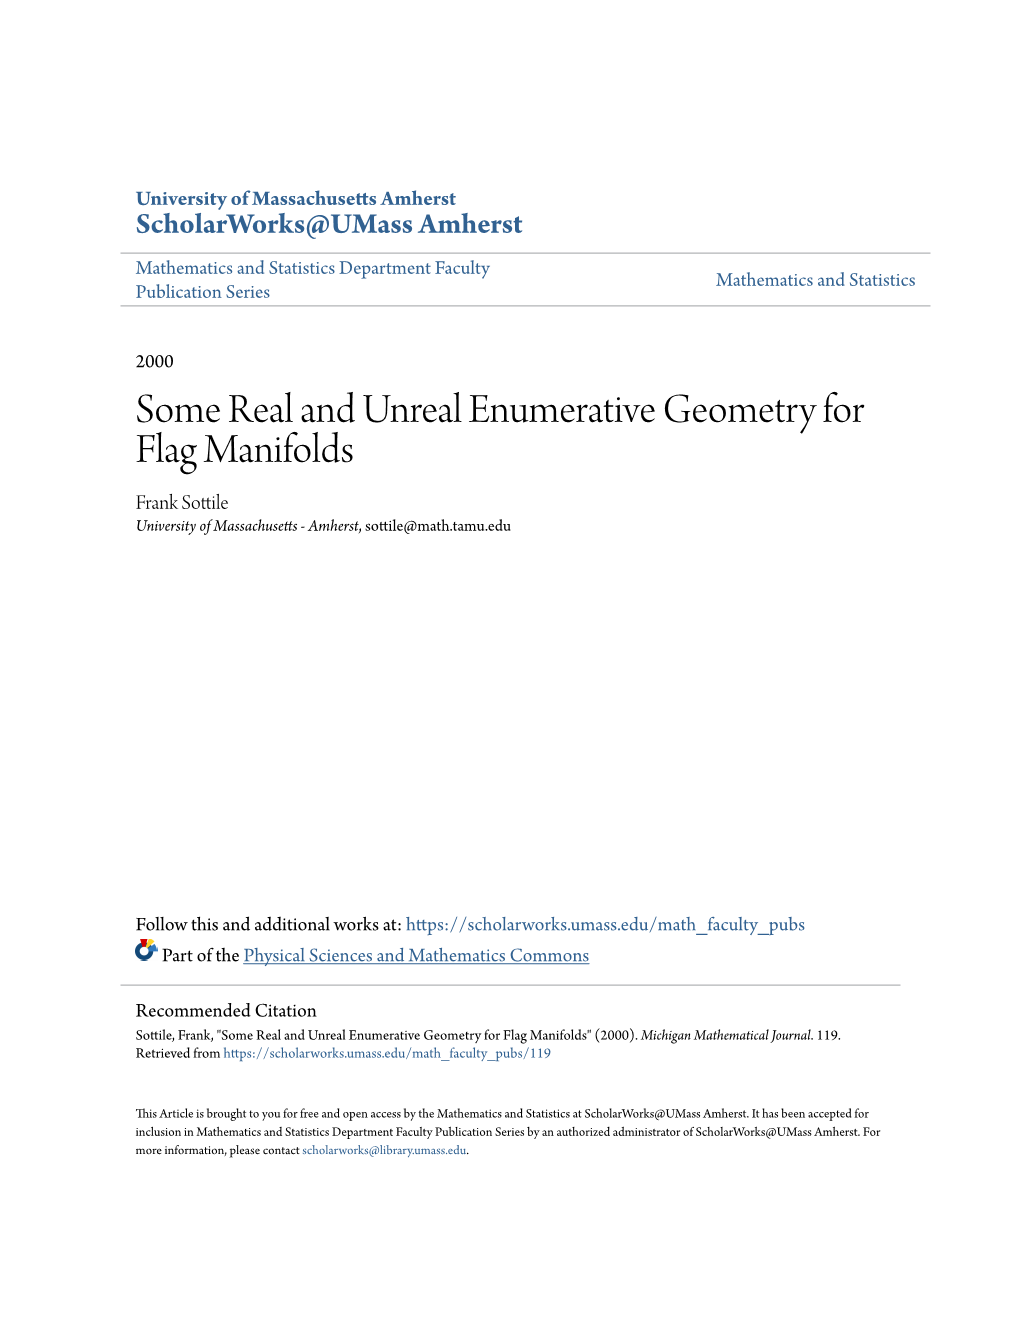 Some Real and Unreal Enumerative Geometry for Flag Manifolds Frank Sottile University of Massachusetts - Amherst, Sottile@Math.Tamu.Edu